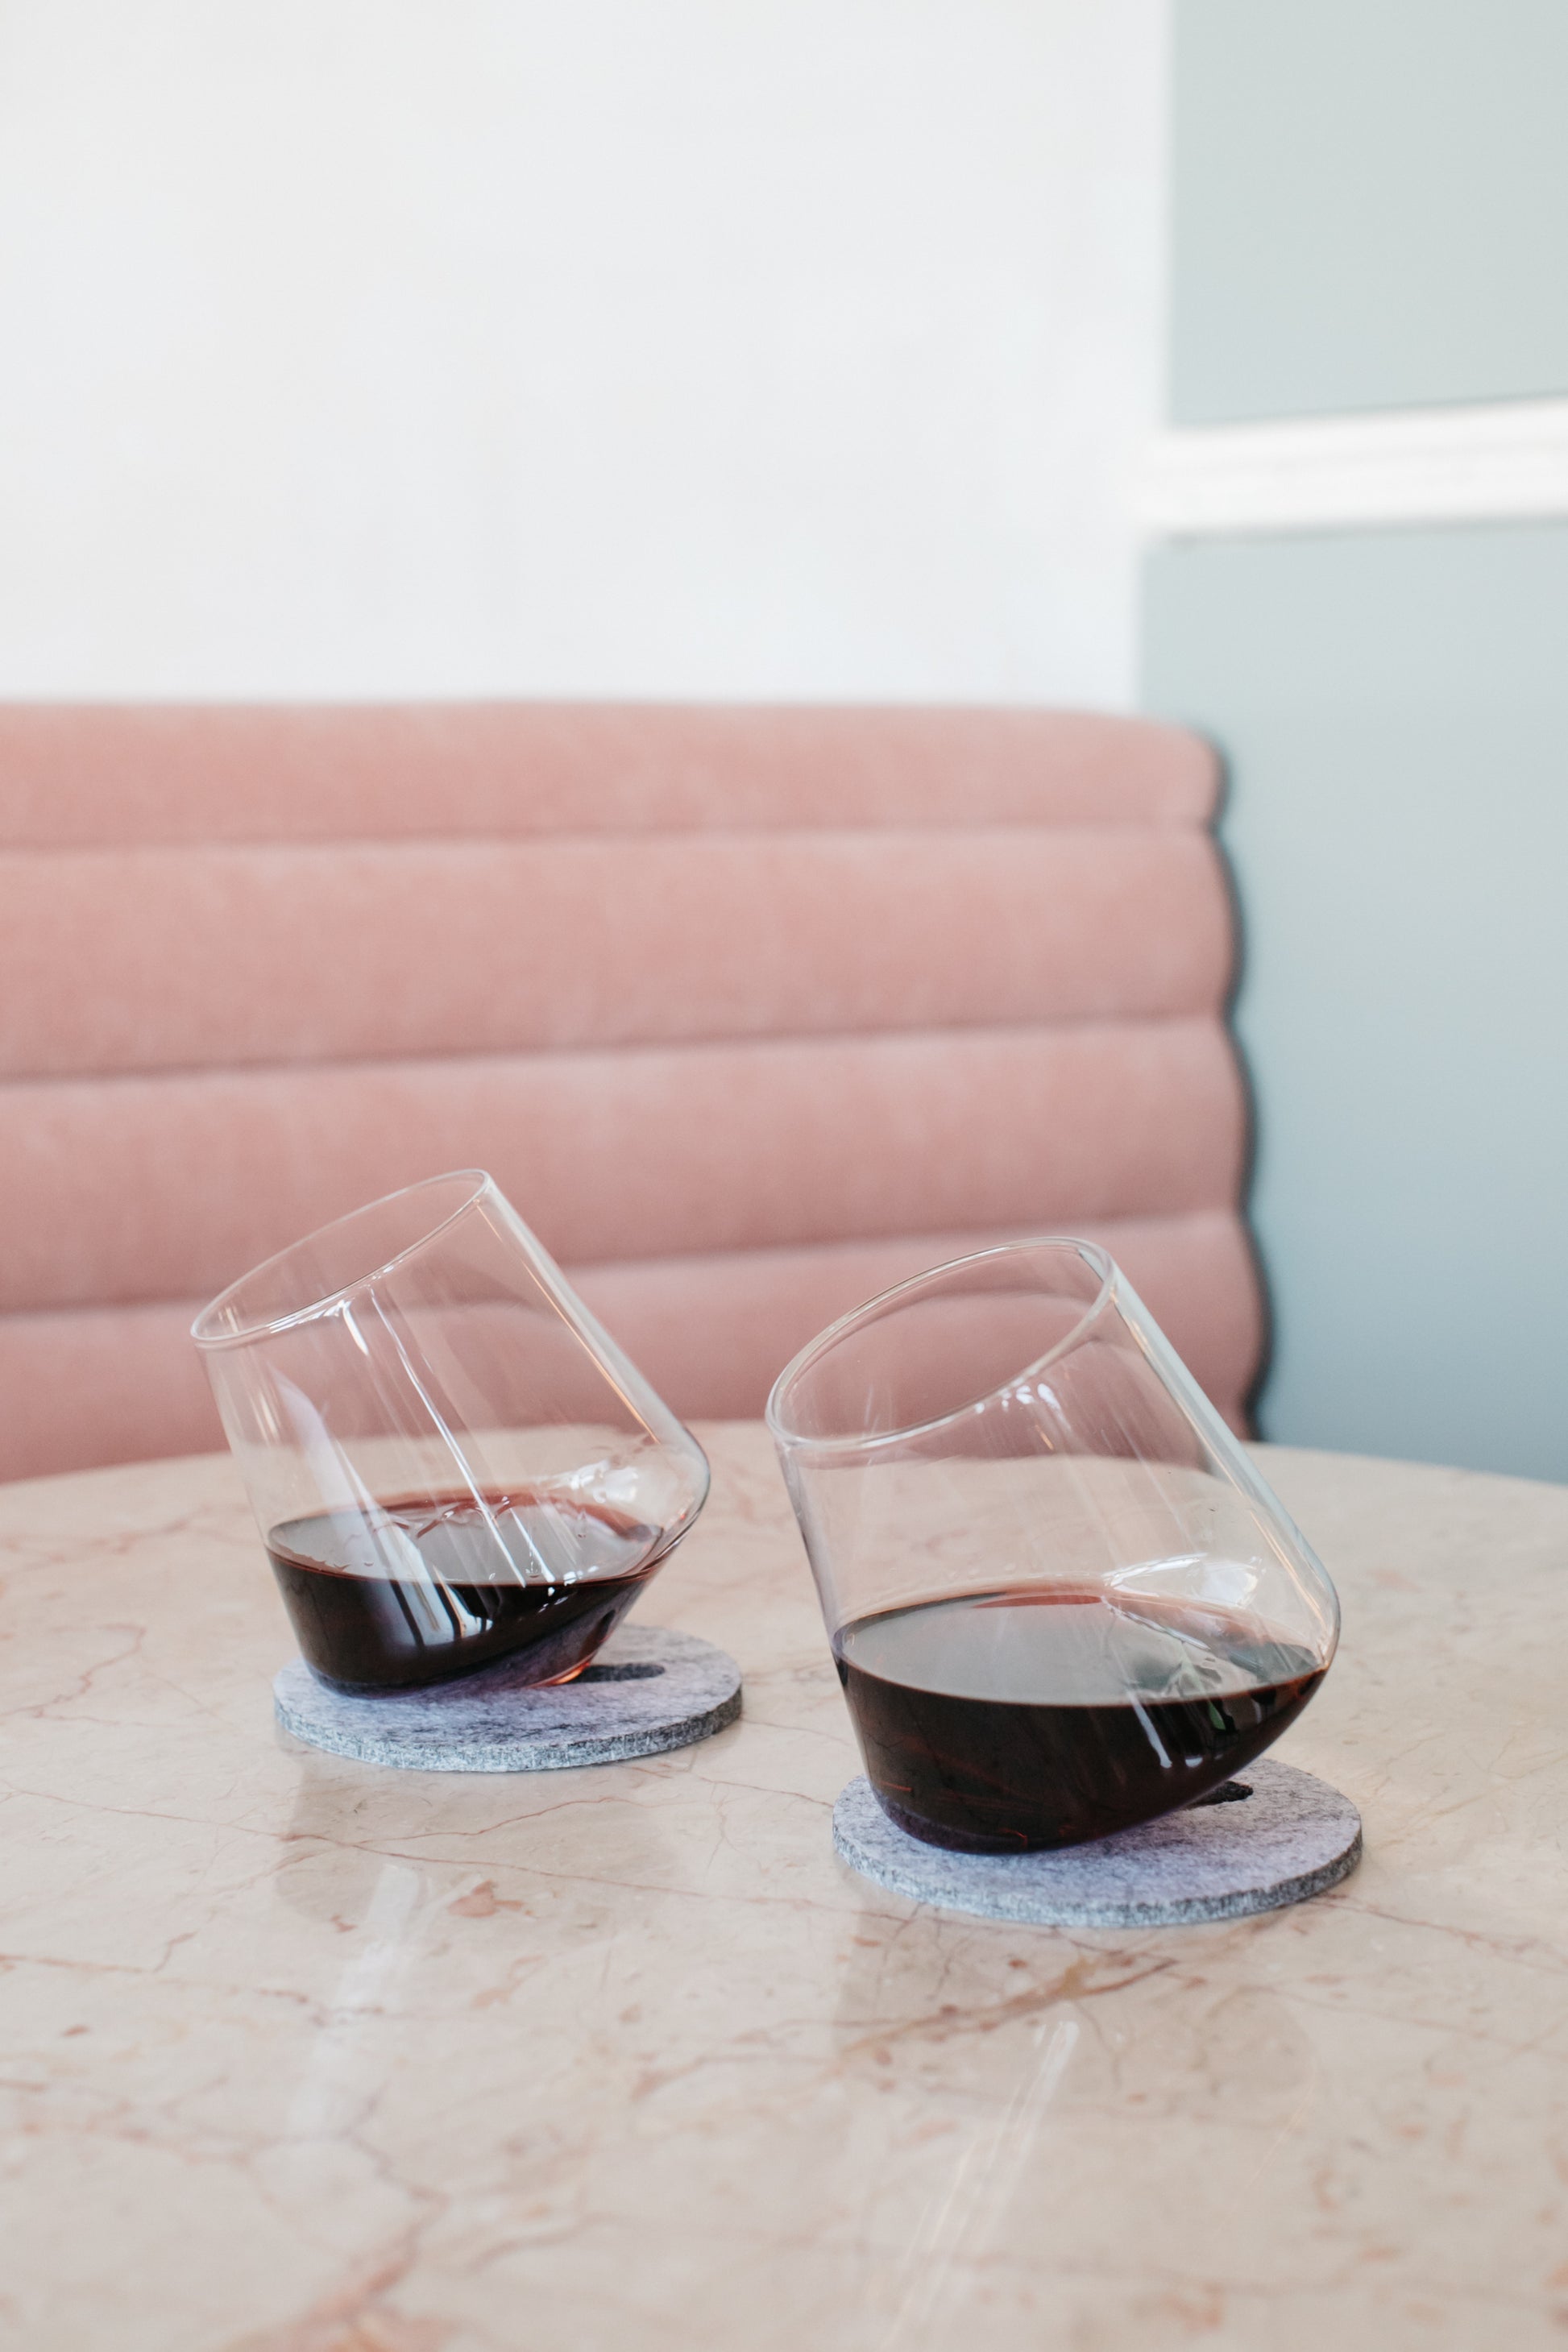 Cupa Vino Glass by Sempli | Luxury Glassware | Willow & Albert Home